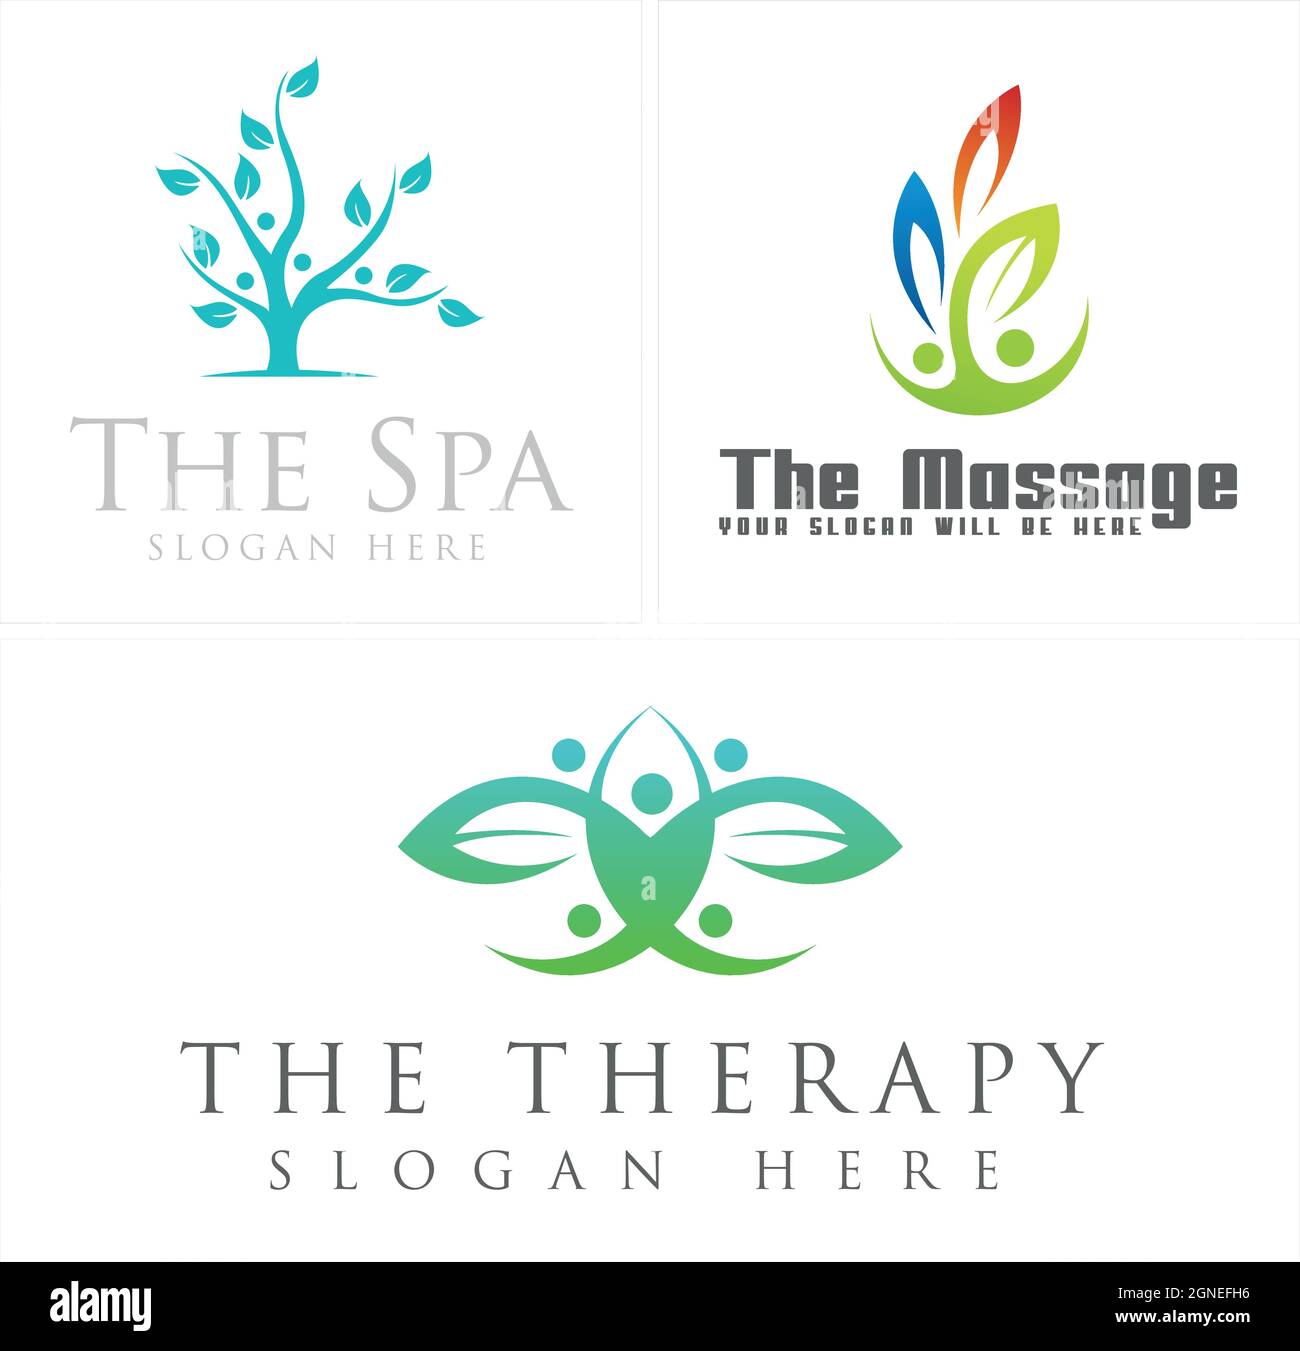 Spa aesthetics massage people nature logo design Stock Vector